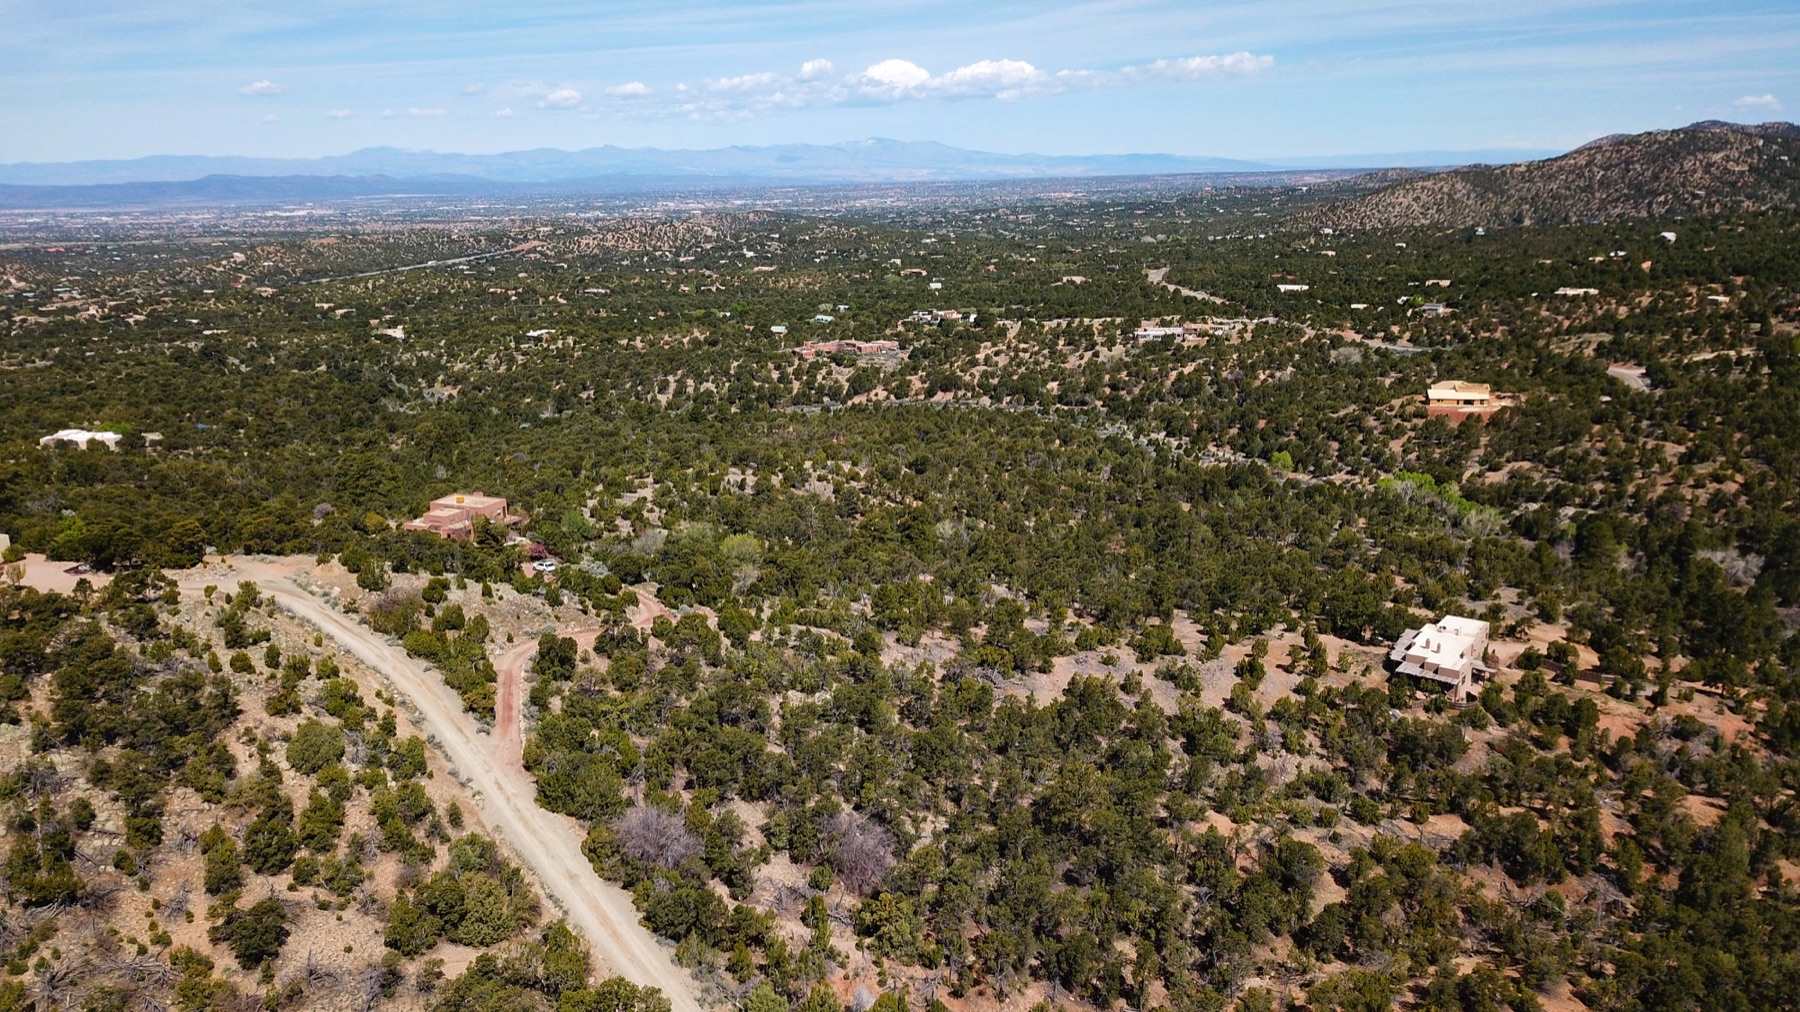 26 A Old Santa Fe, Santa Fe, New Mexico 87505, ,Land,For Sale,26 A Old Santa Fe,201802825